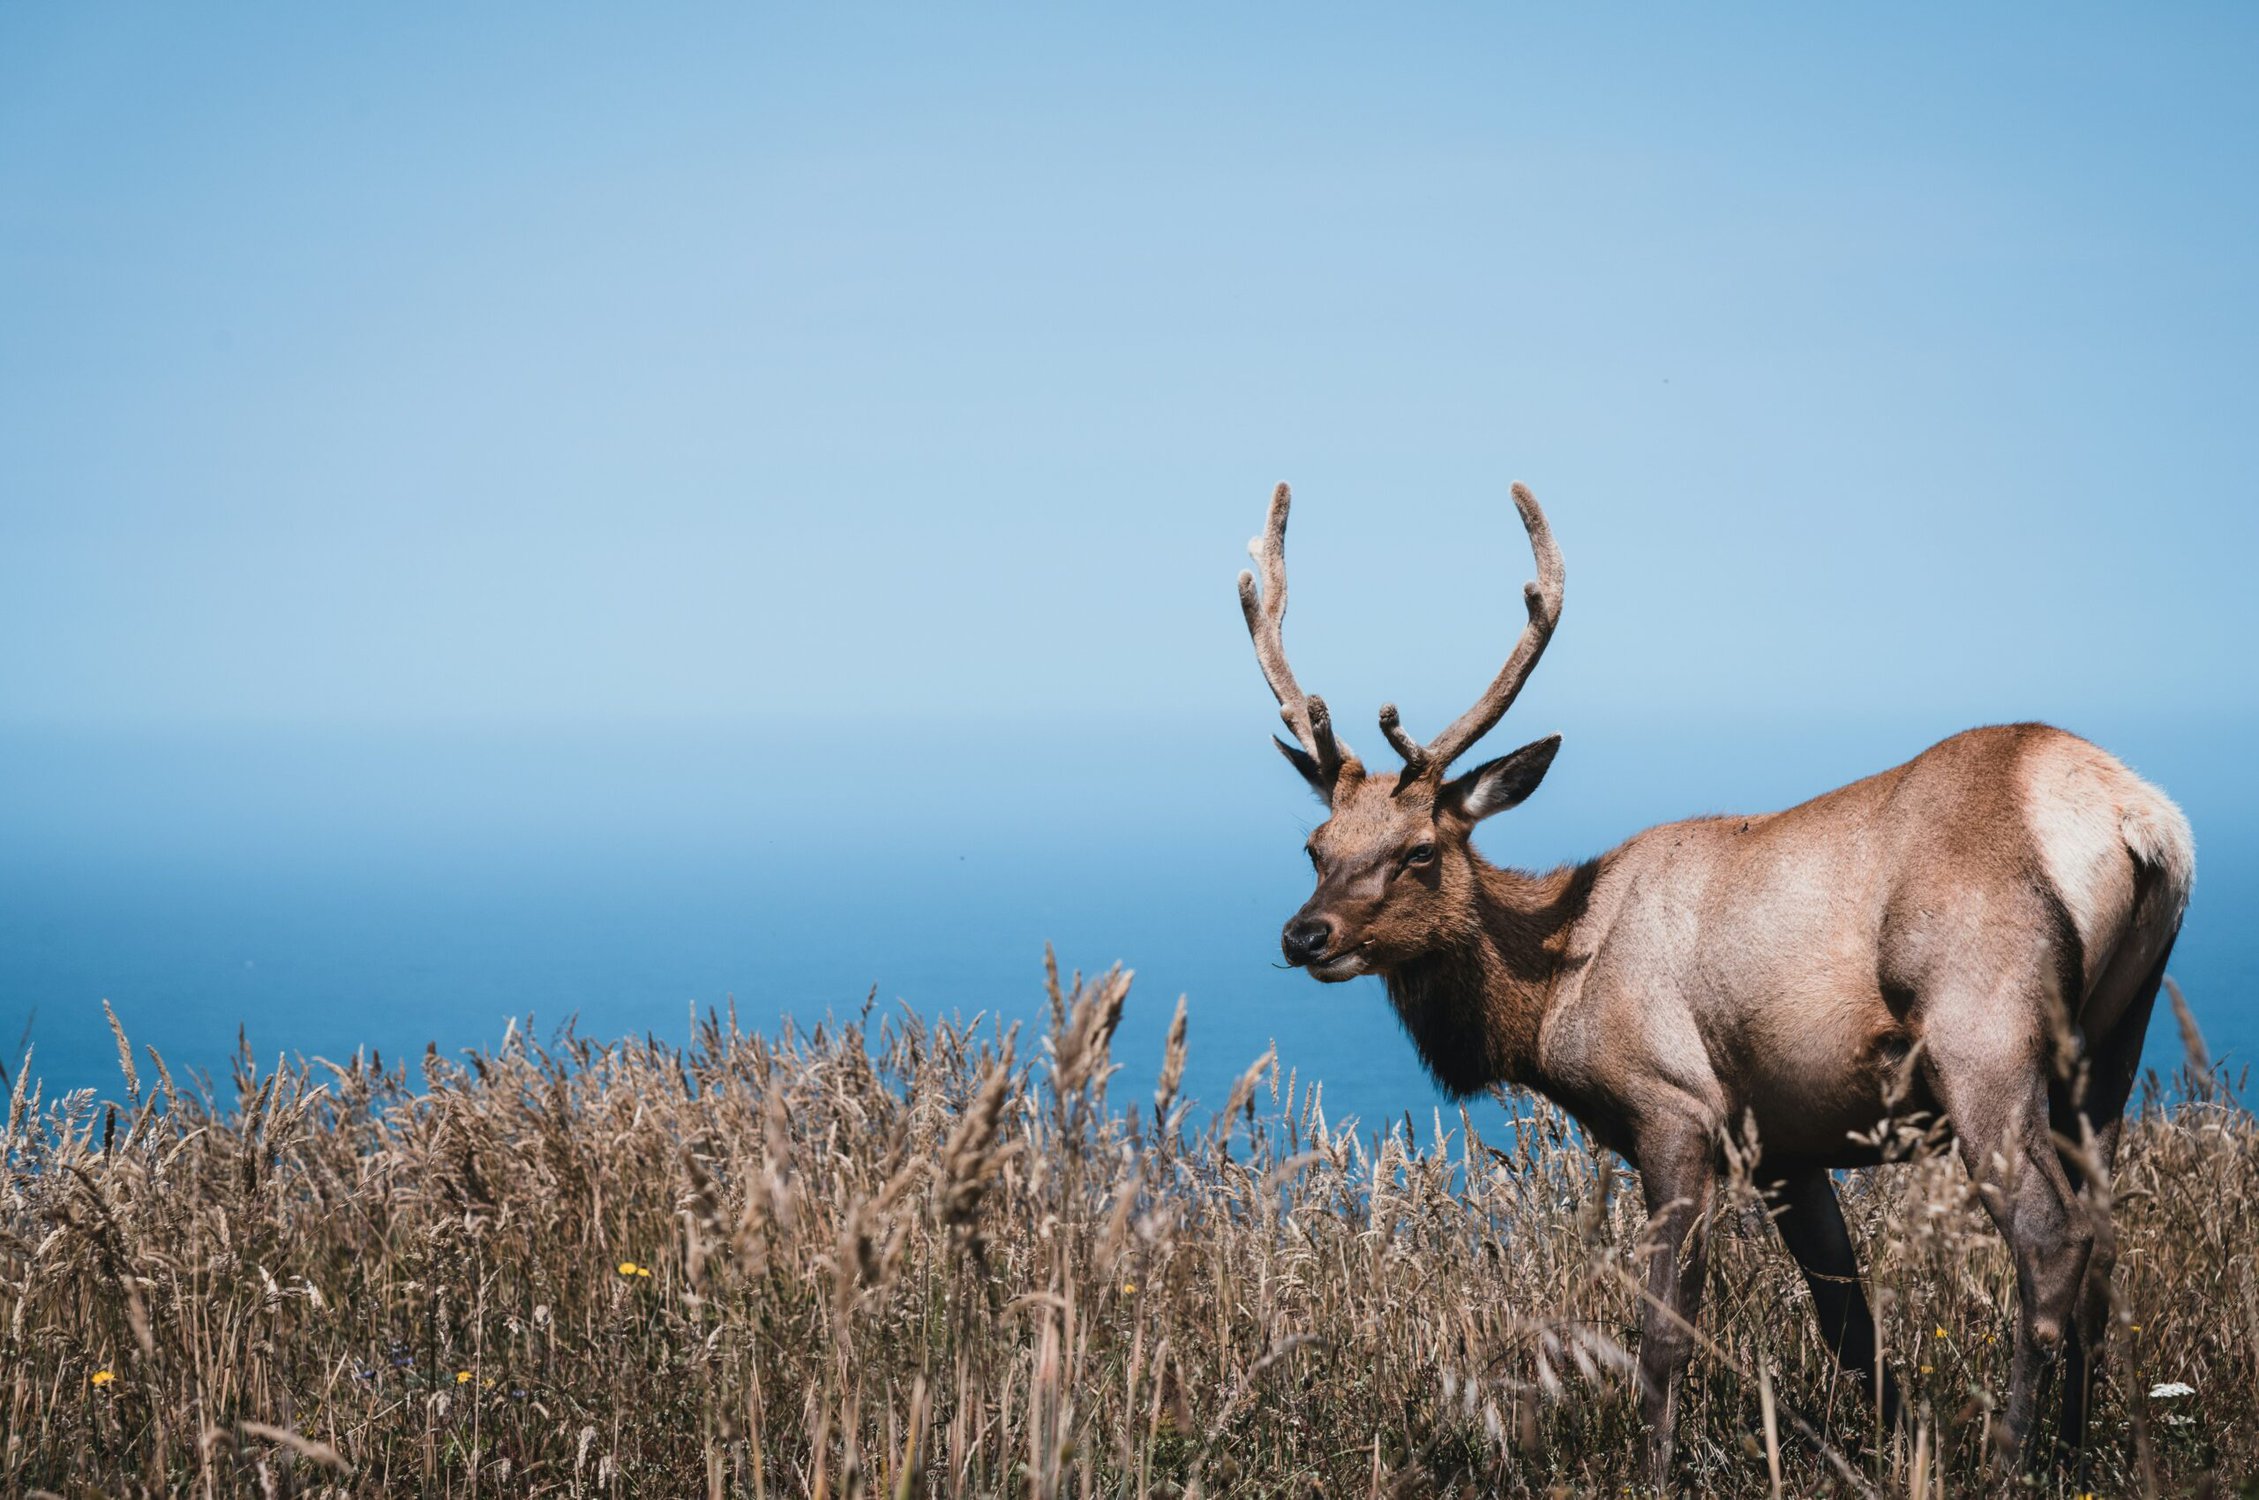 Decorative image of an elk standing in a field overlooking the ocean.